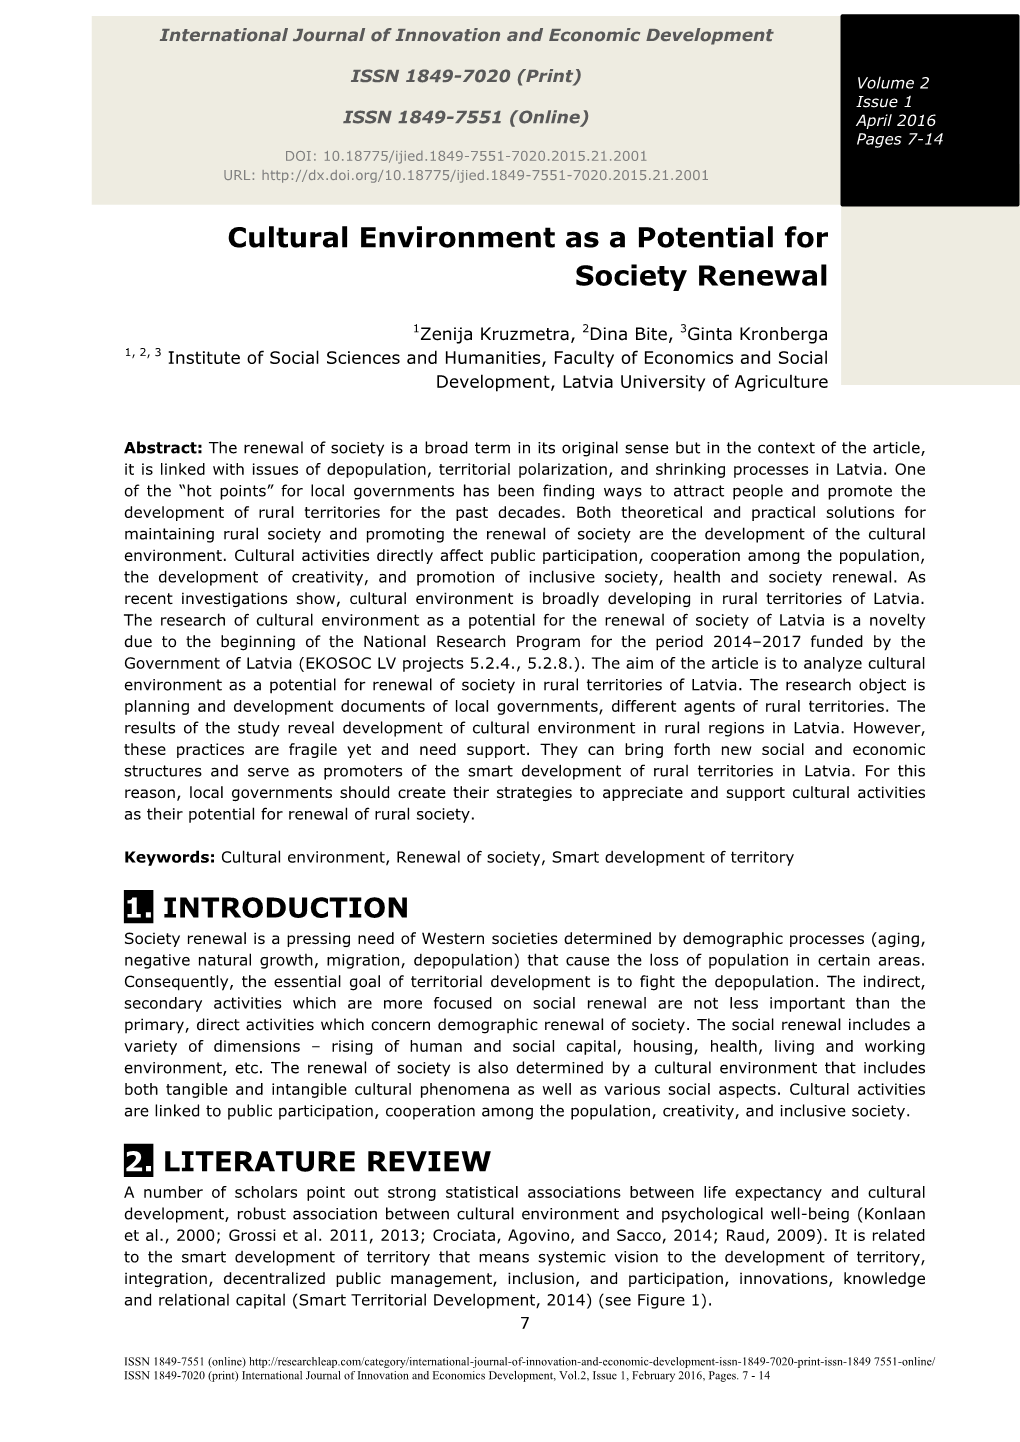 Cultural Environment As a Potential for Society Renewal